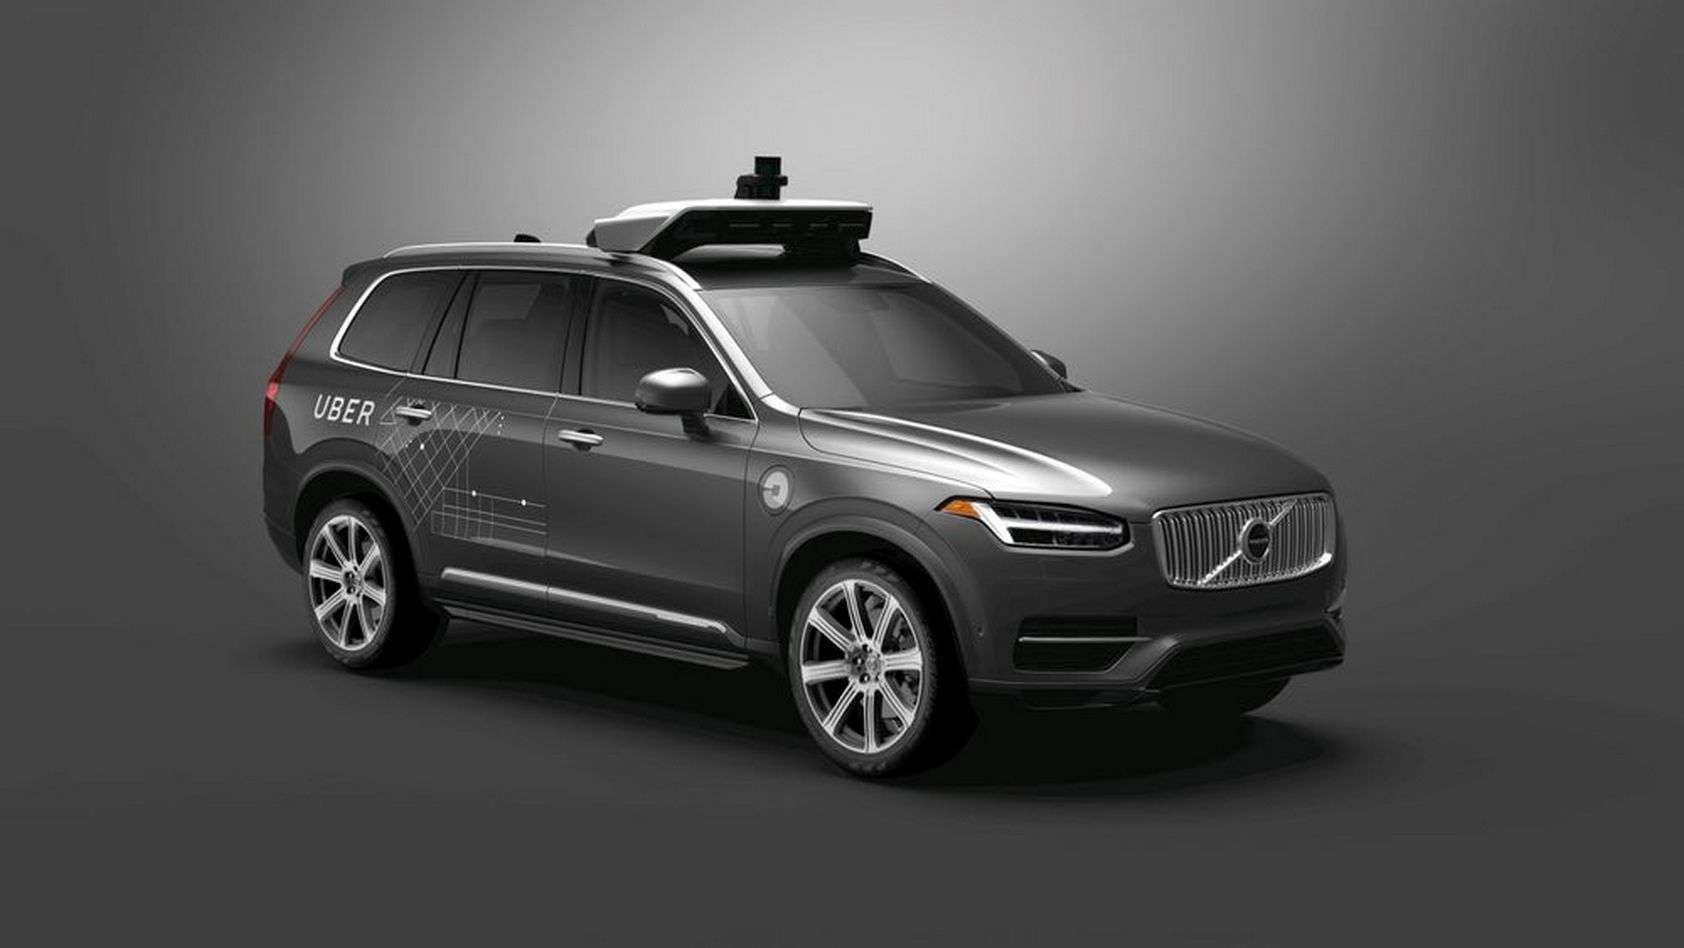 Voiture autonome : Uber va acheter 24.000 Volvo XC90